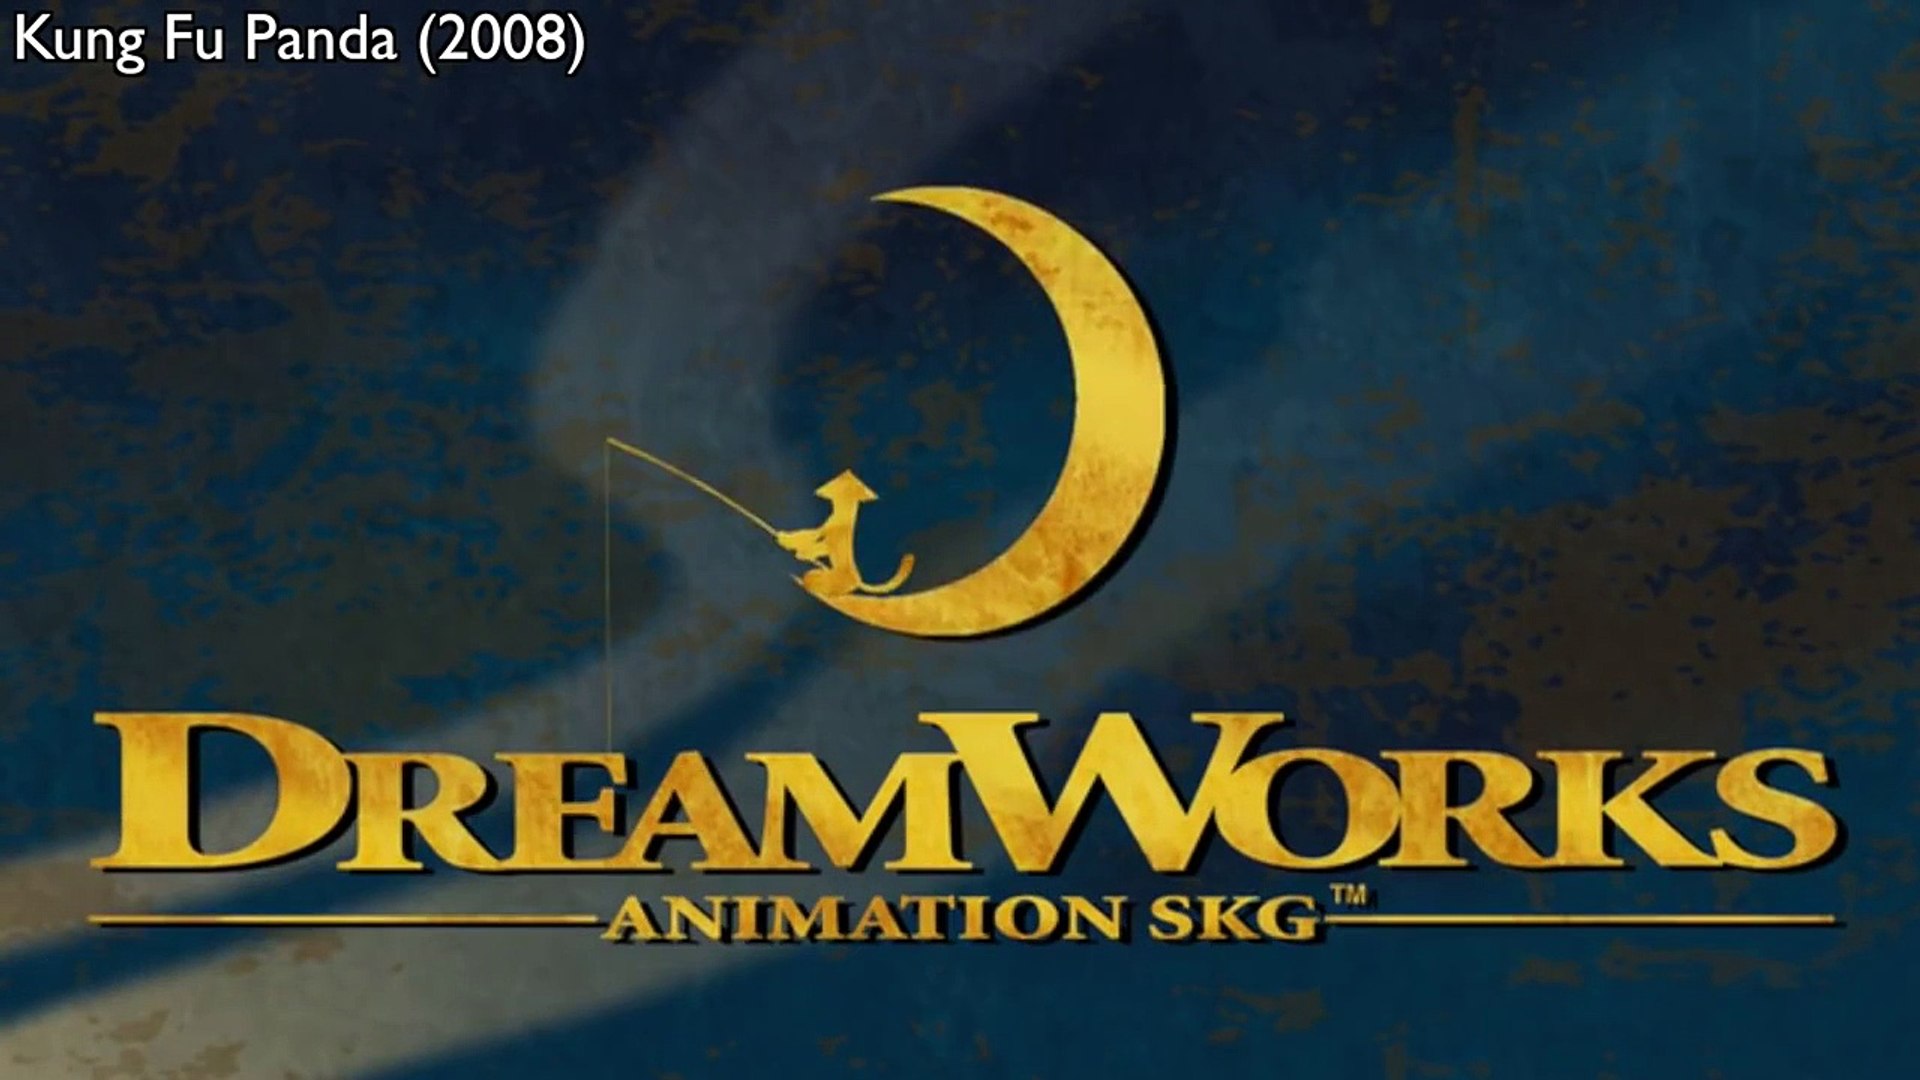 Dreamworks Animation Logo 2019